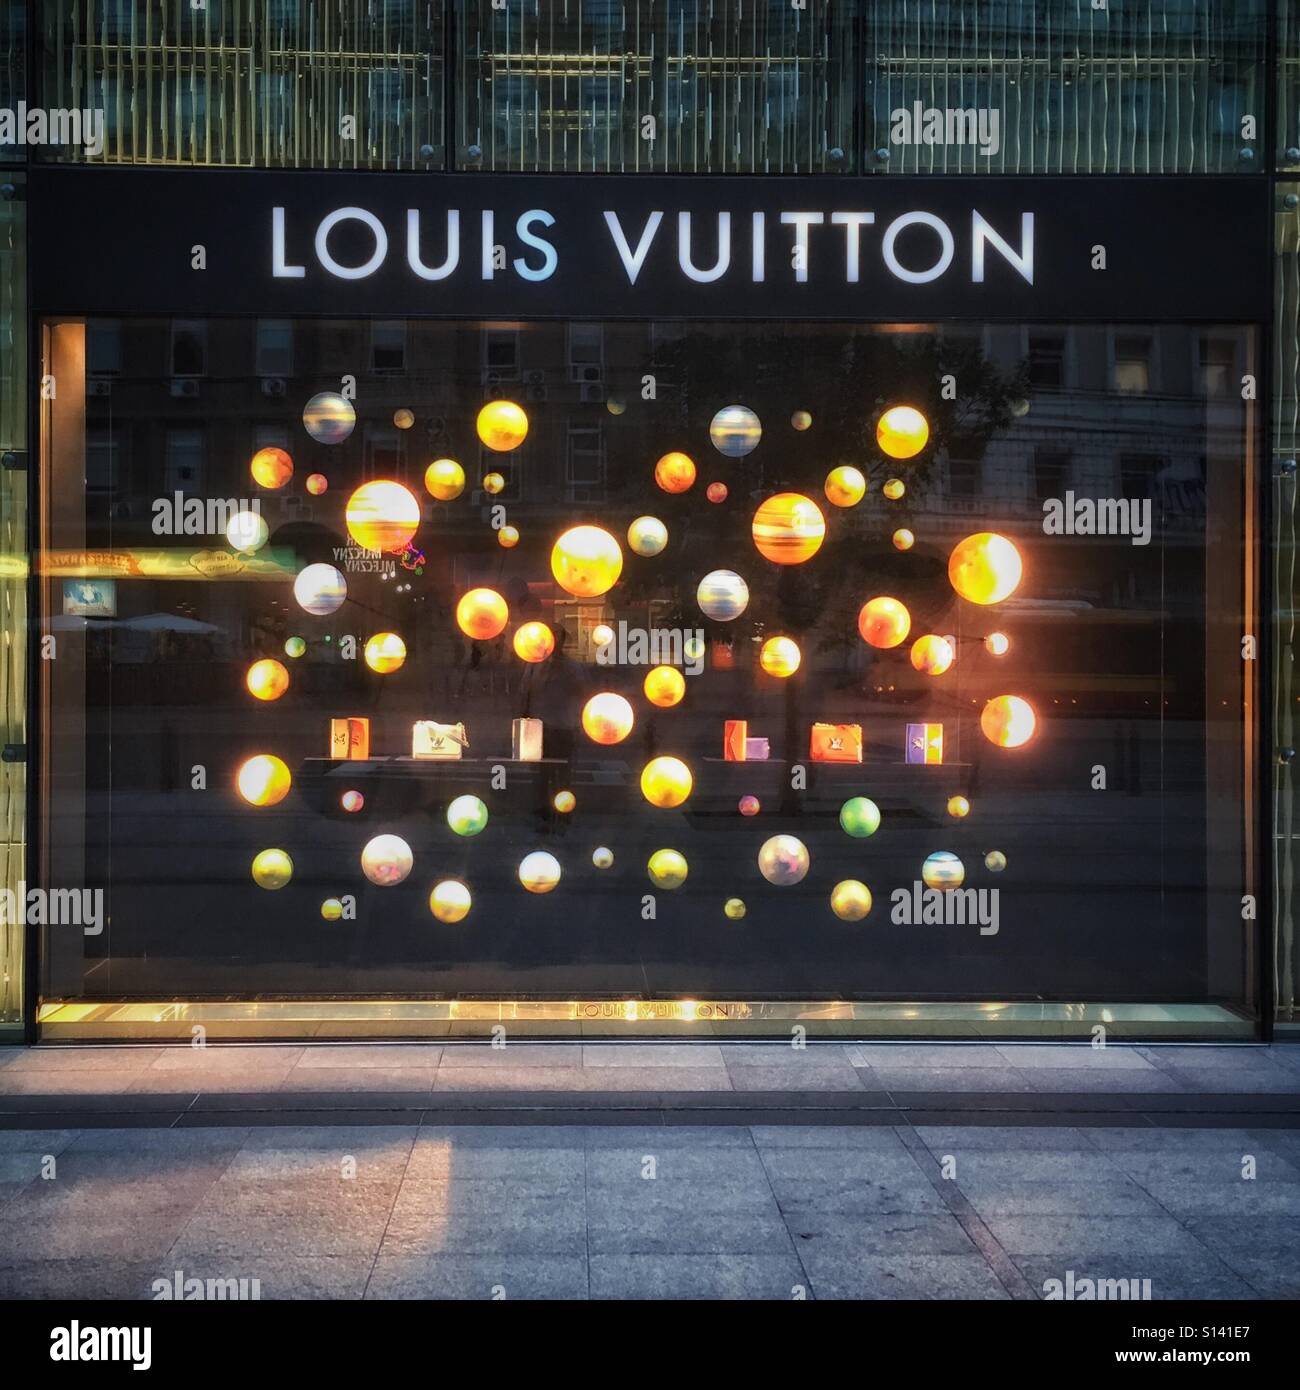 Louis Vuitton shop in Warsaw Stock Photo - Alamy